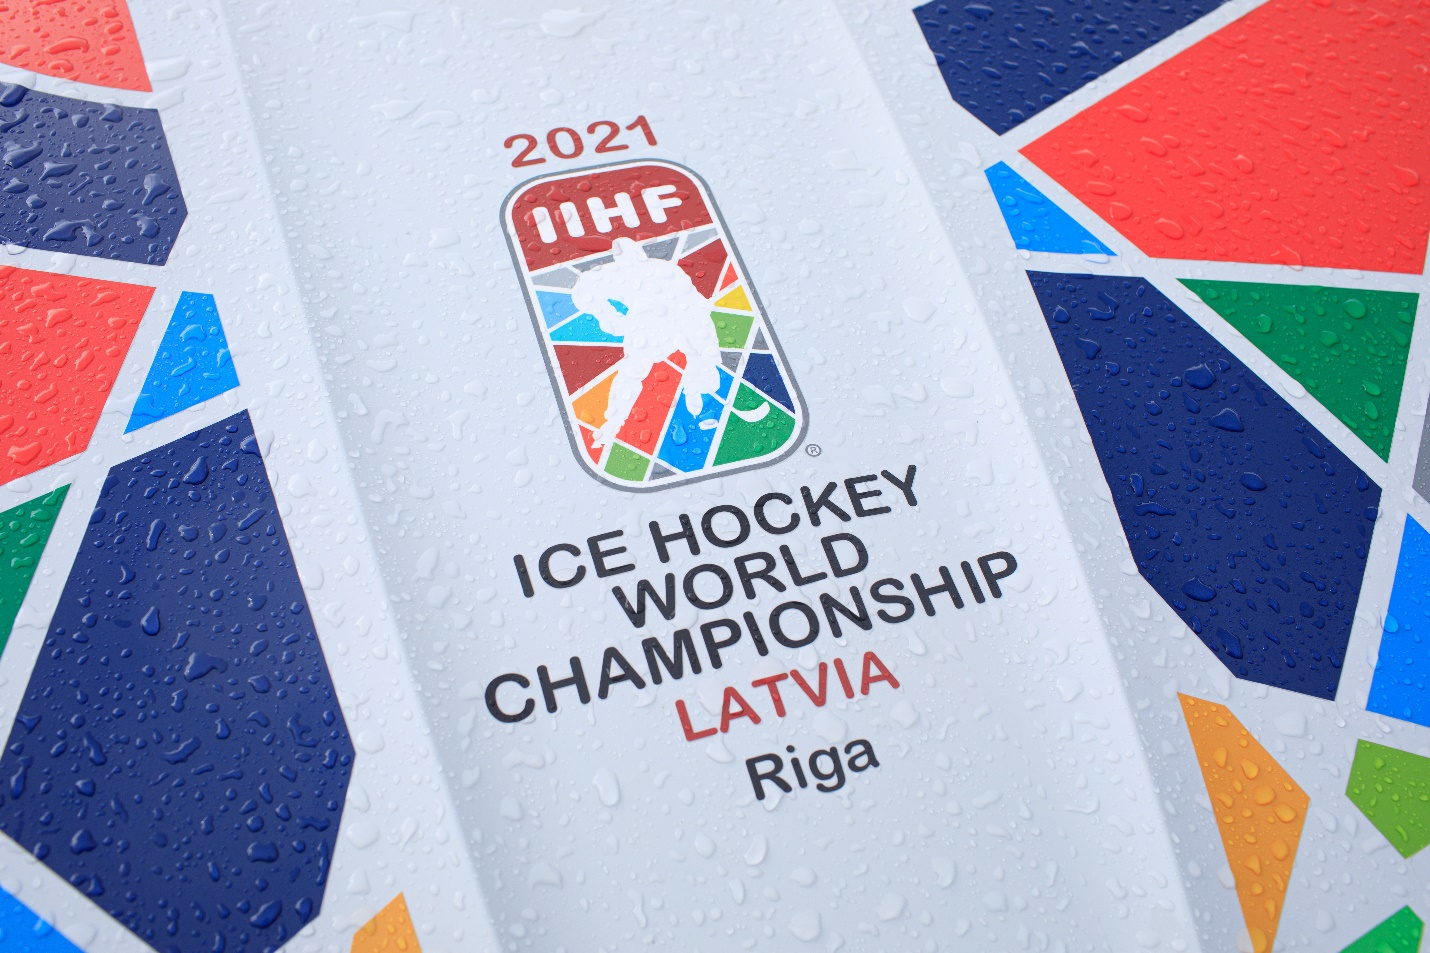 last year's IIHF championship logo